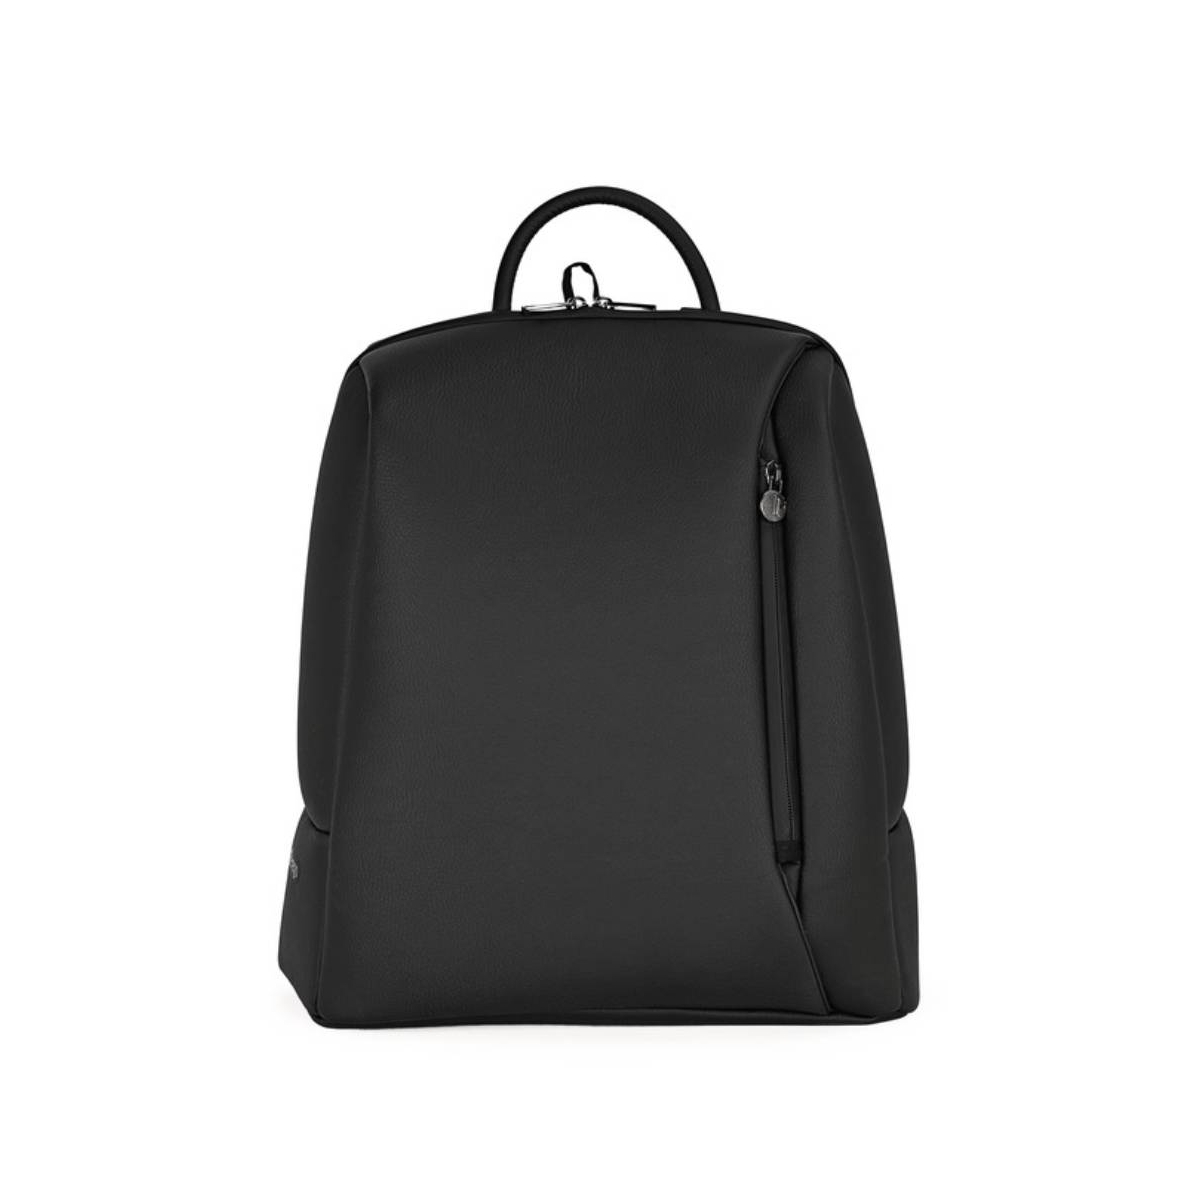 https://www.kiddies-kingdom.com/217684-thickbox_default/peg-perego-backpack-changing-bag-licorice.jpg